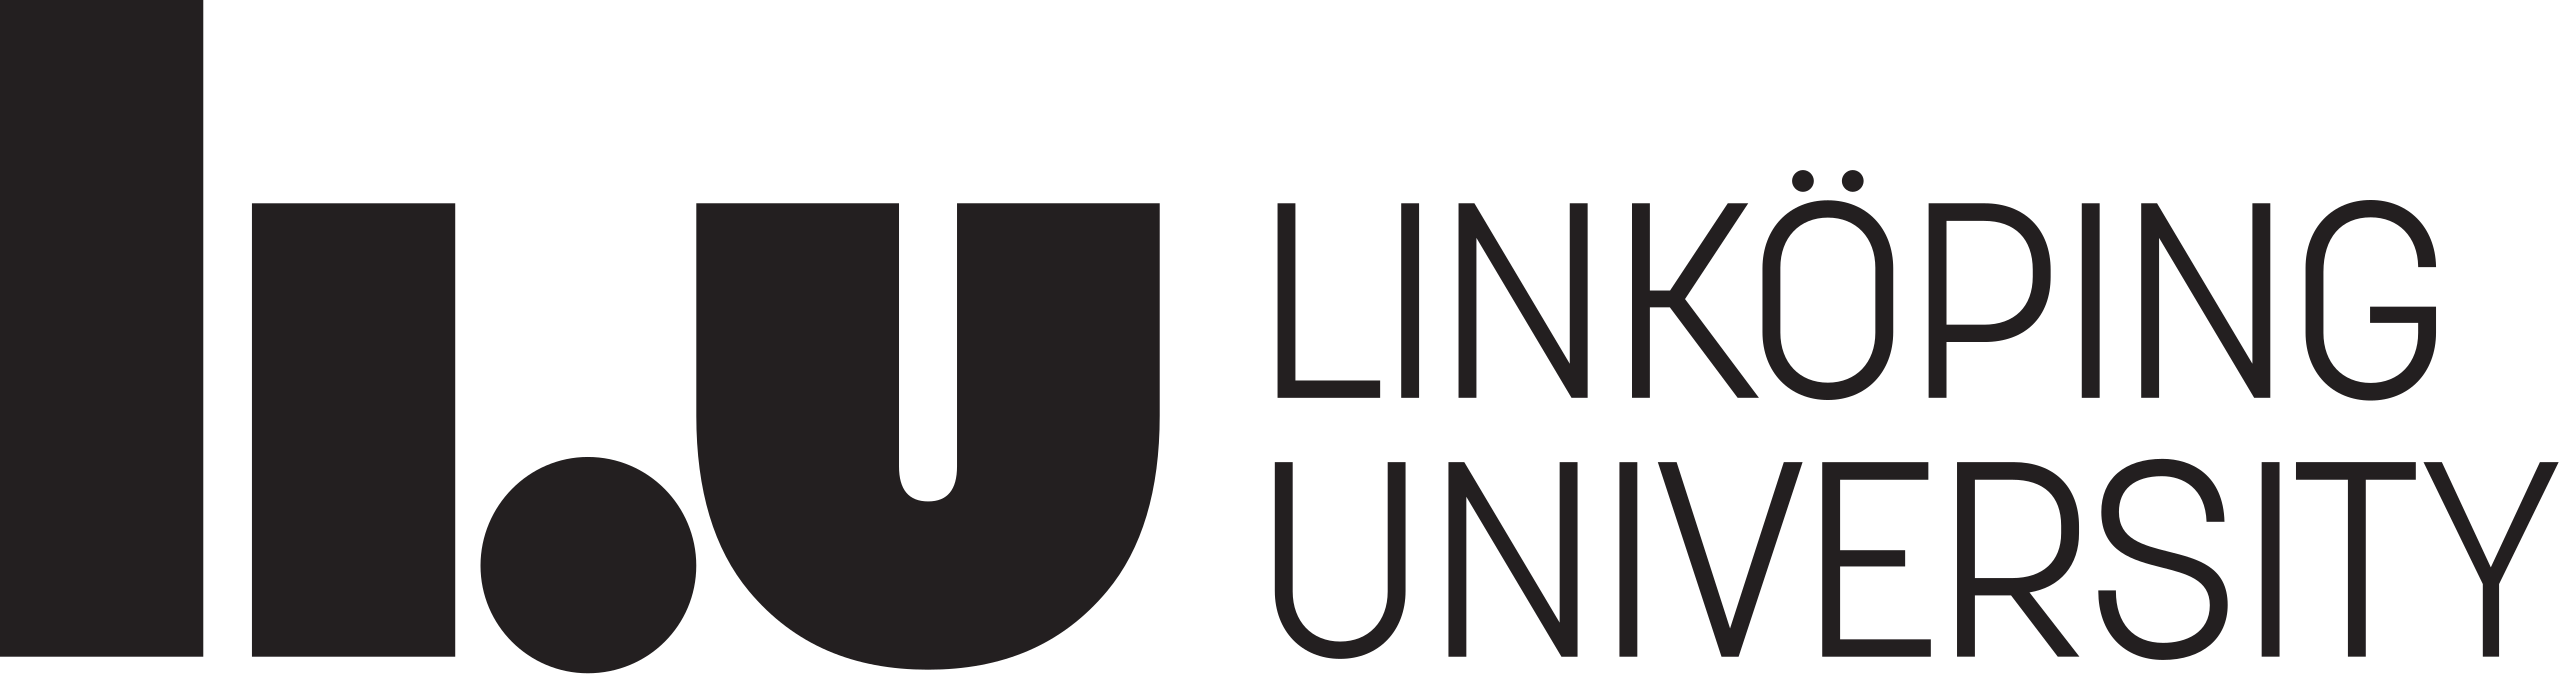 File:Linkoping University Logo.svg - Wikipedia